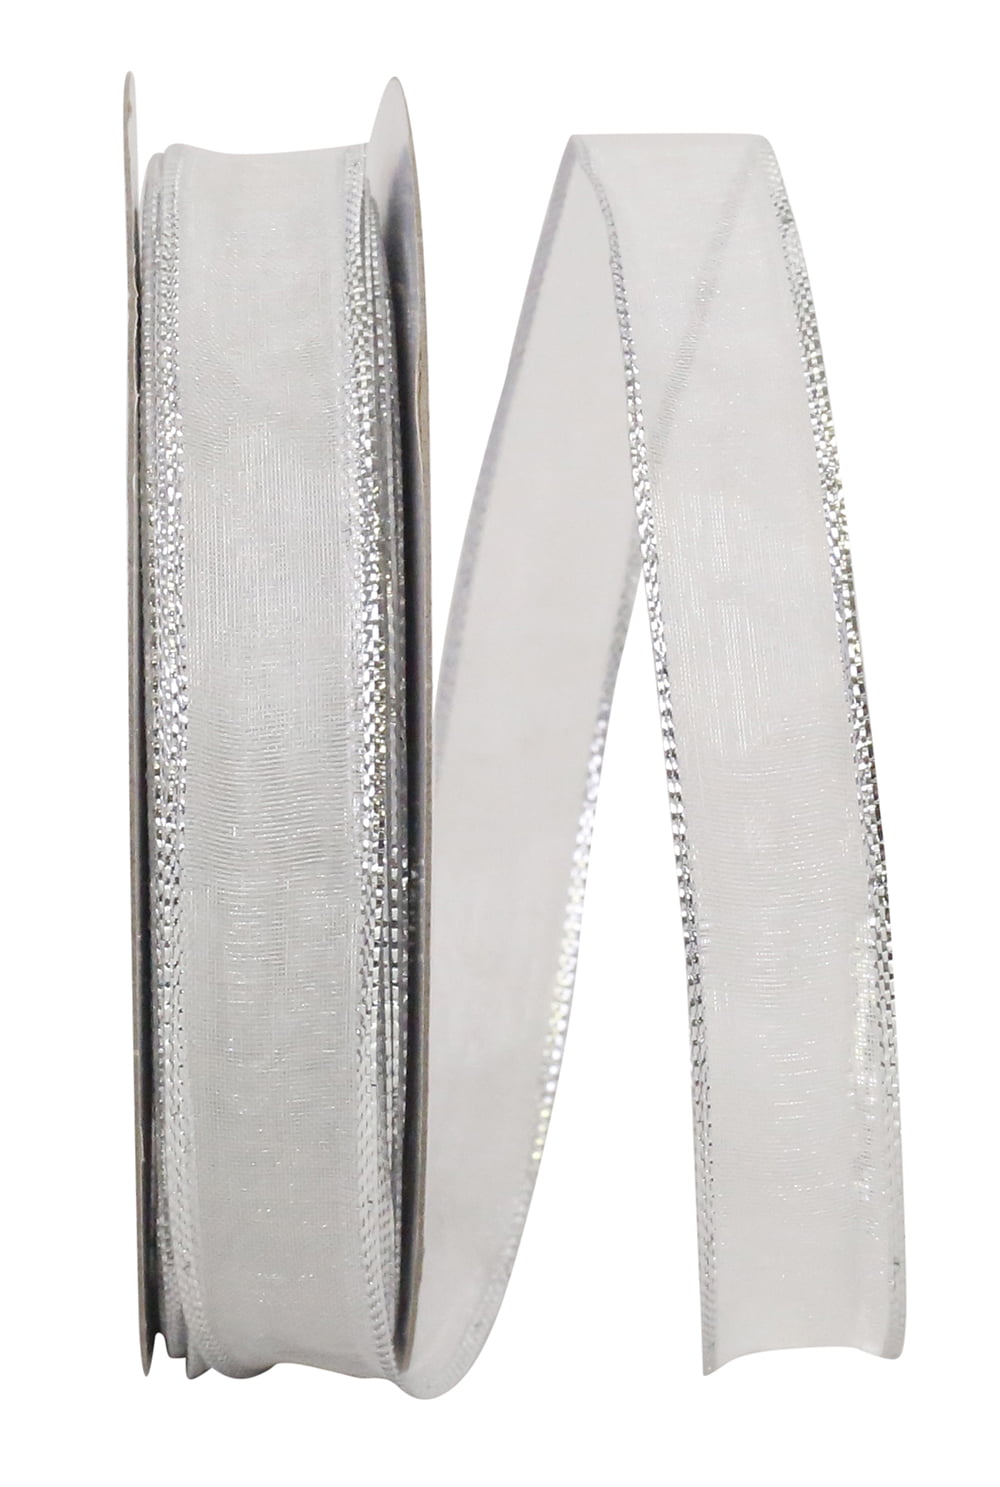 The Ribbon Roll - T25475W-981-03J, Sheer Metallic Edge 2 Wired Edge Rd ...